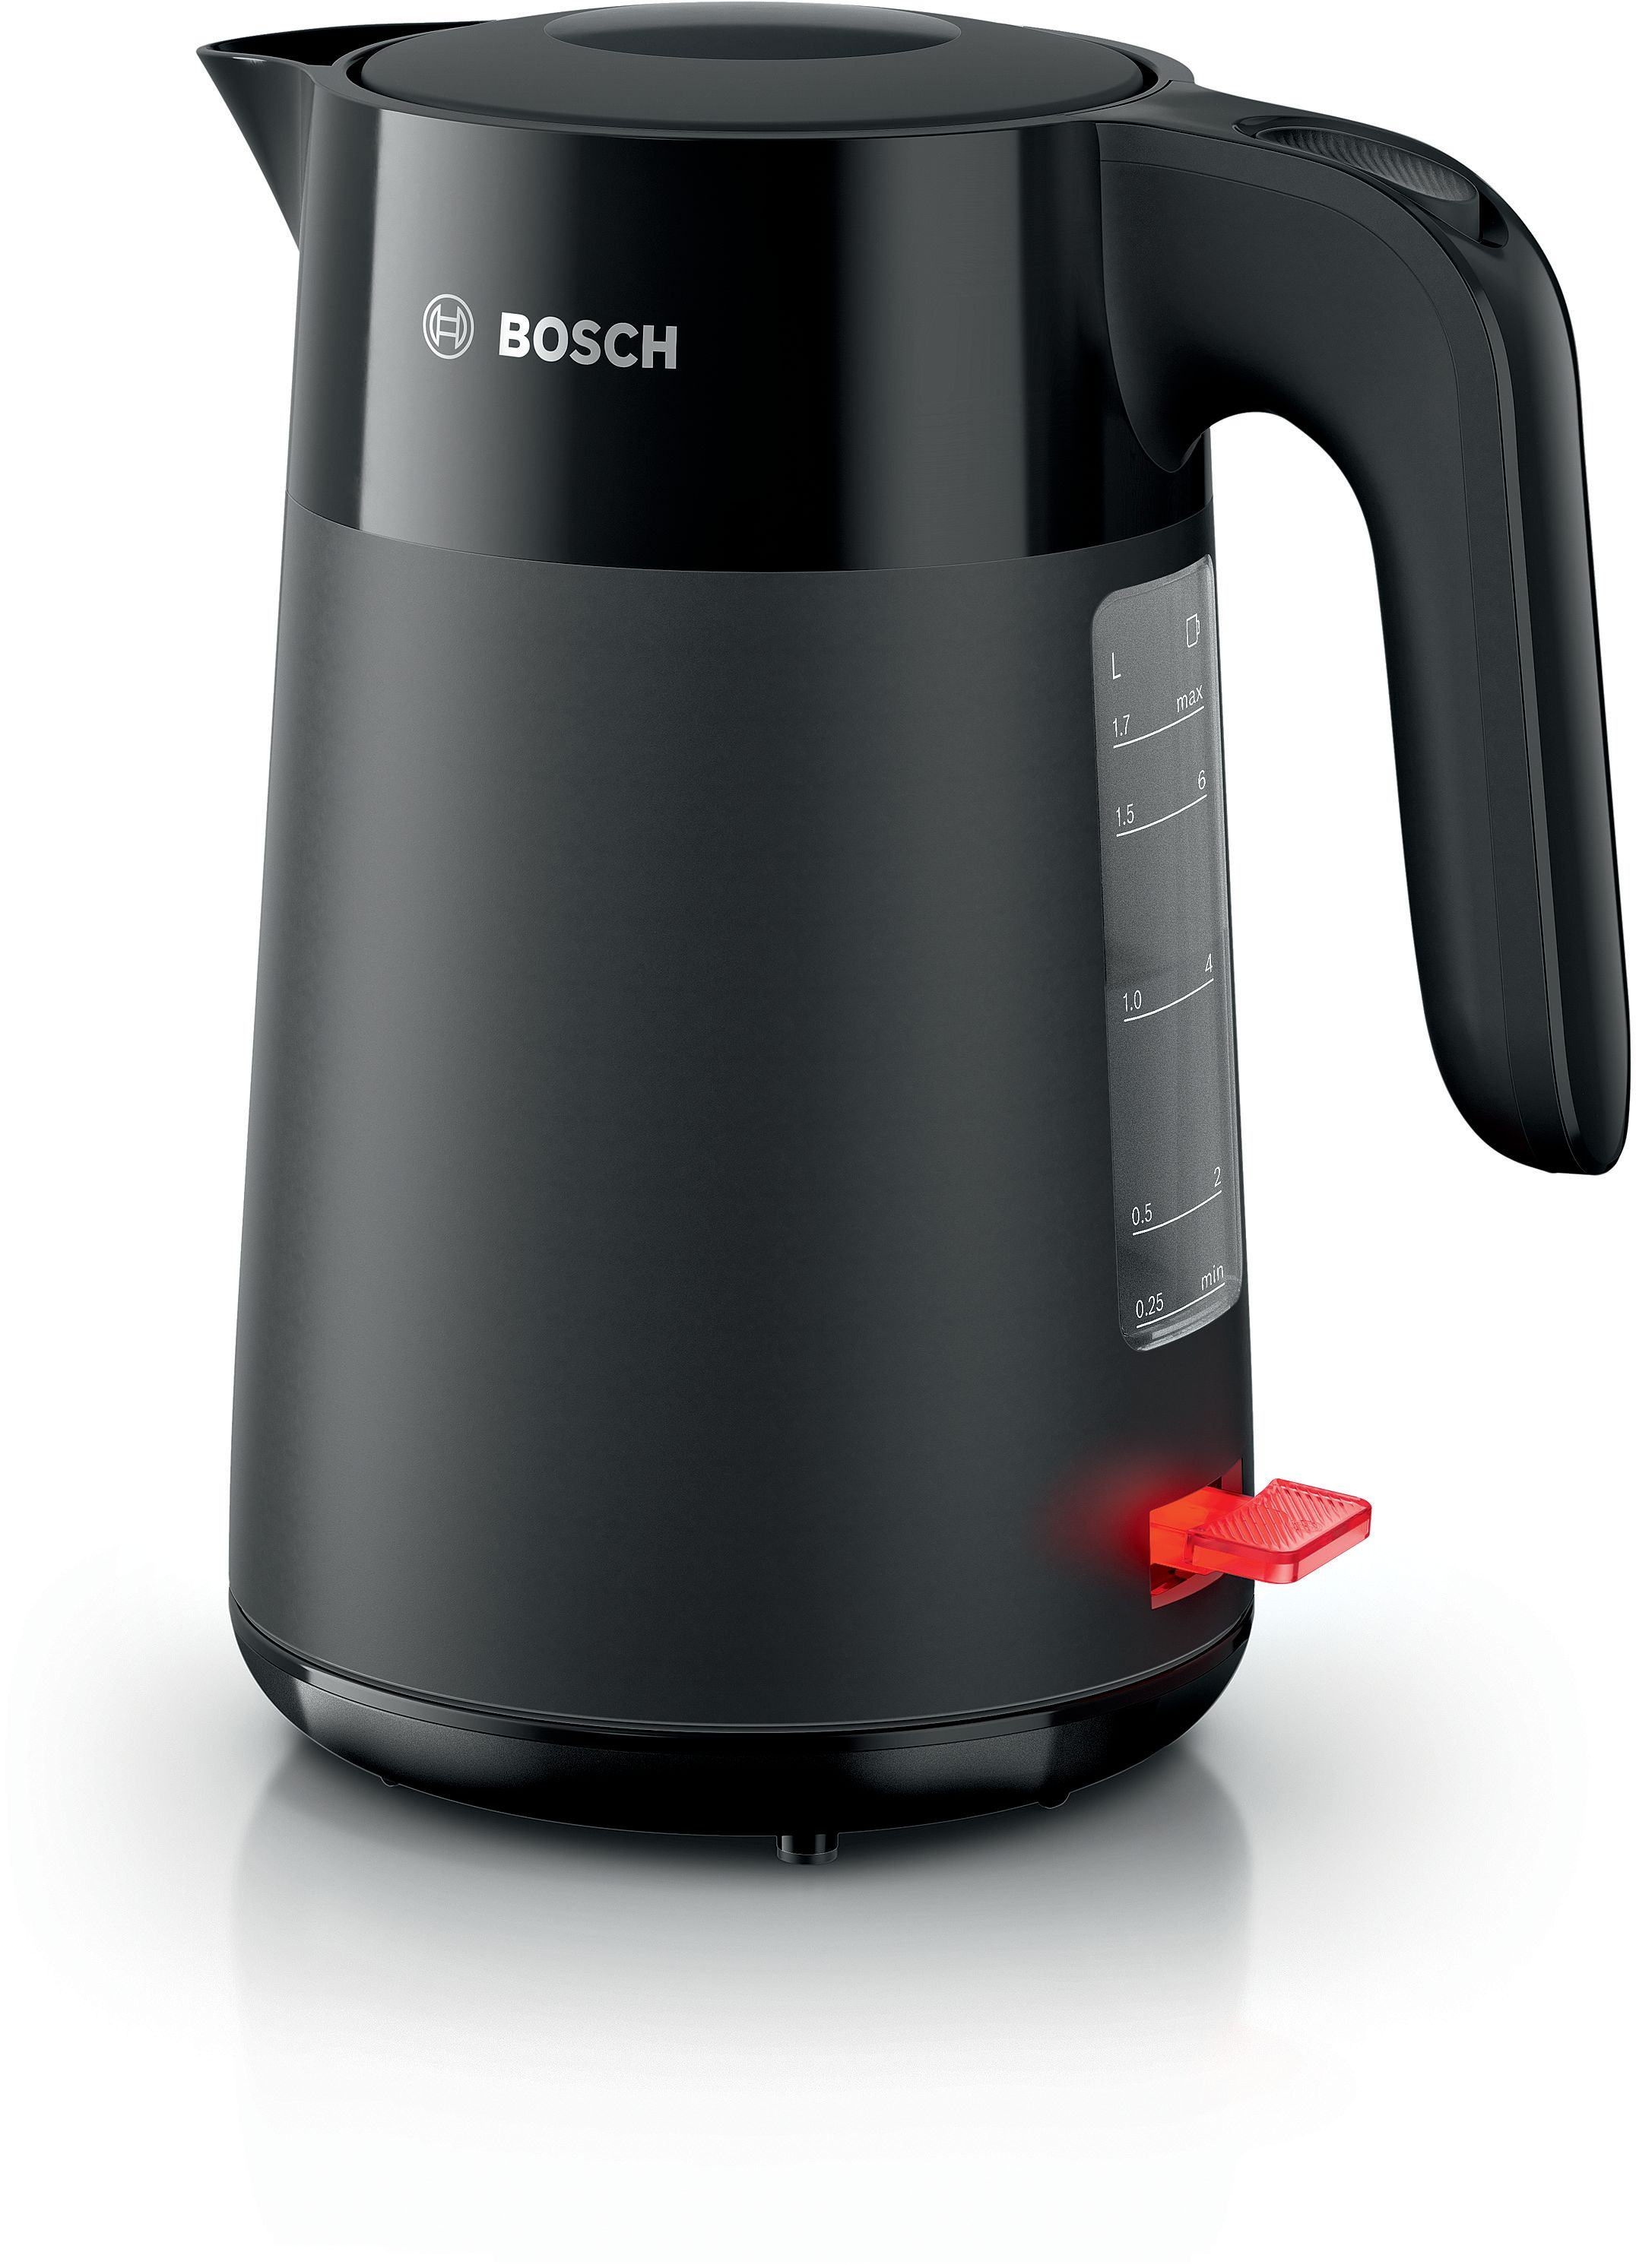 Bosch TWK2M163  Wasserkocher schwarz 1.7 l 